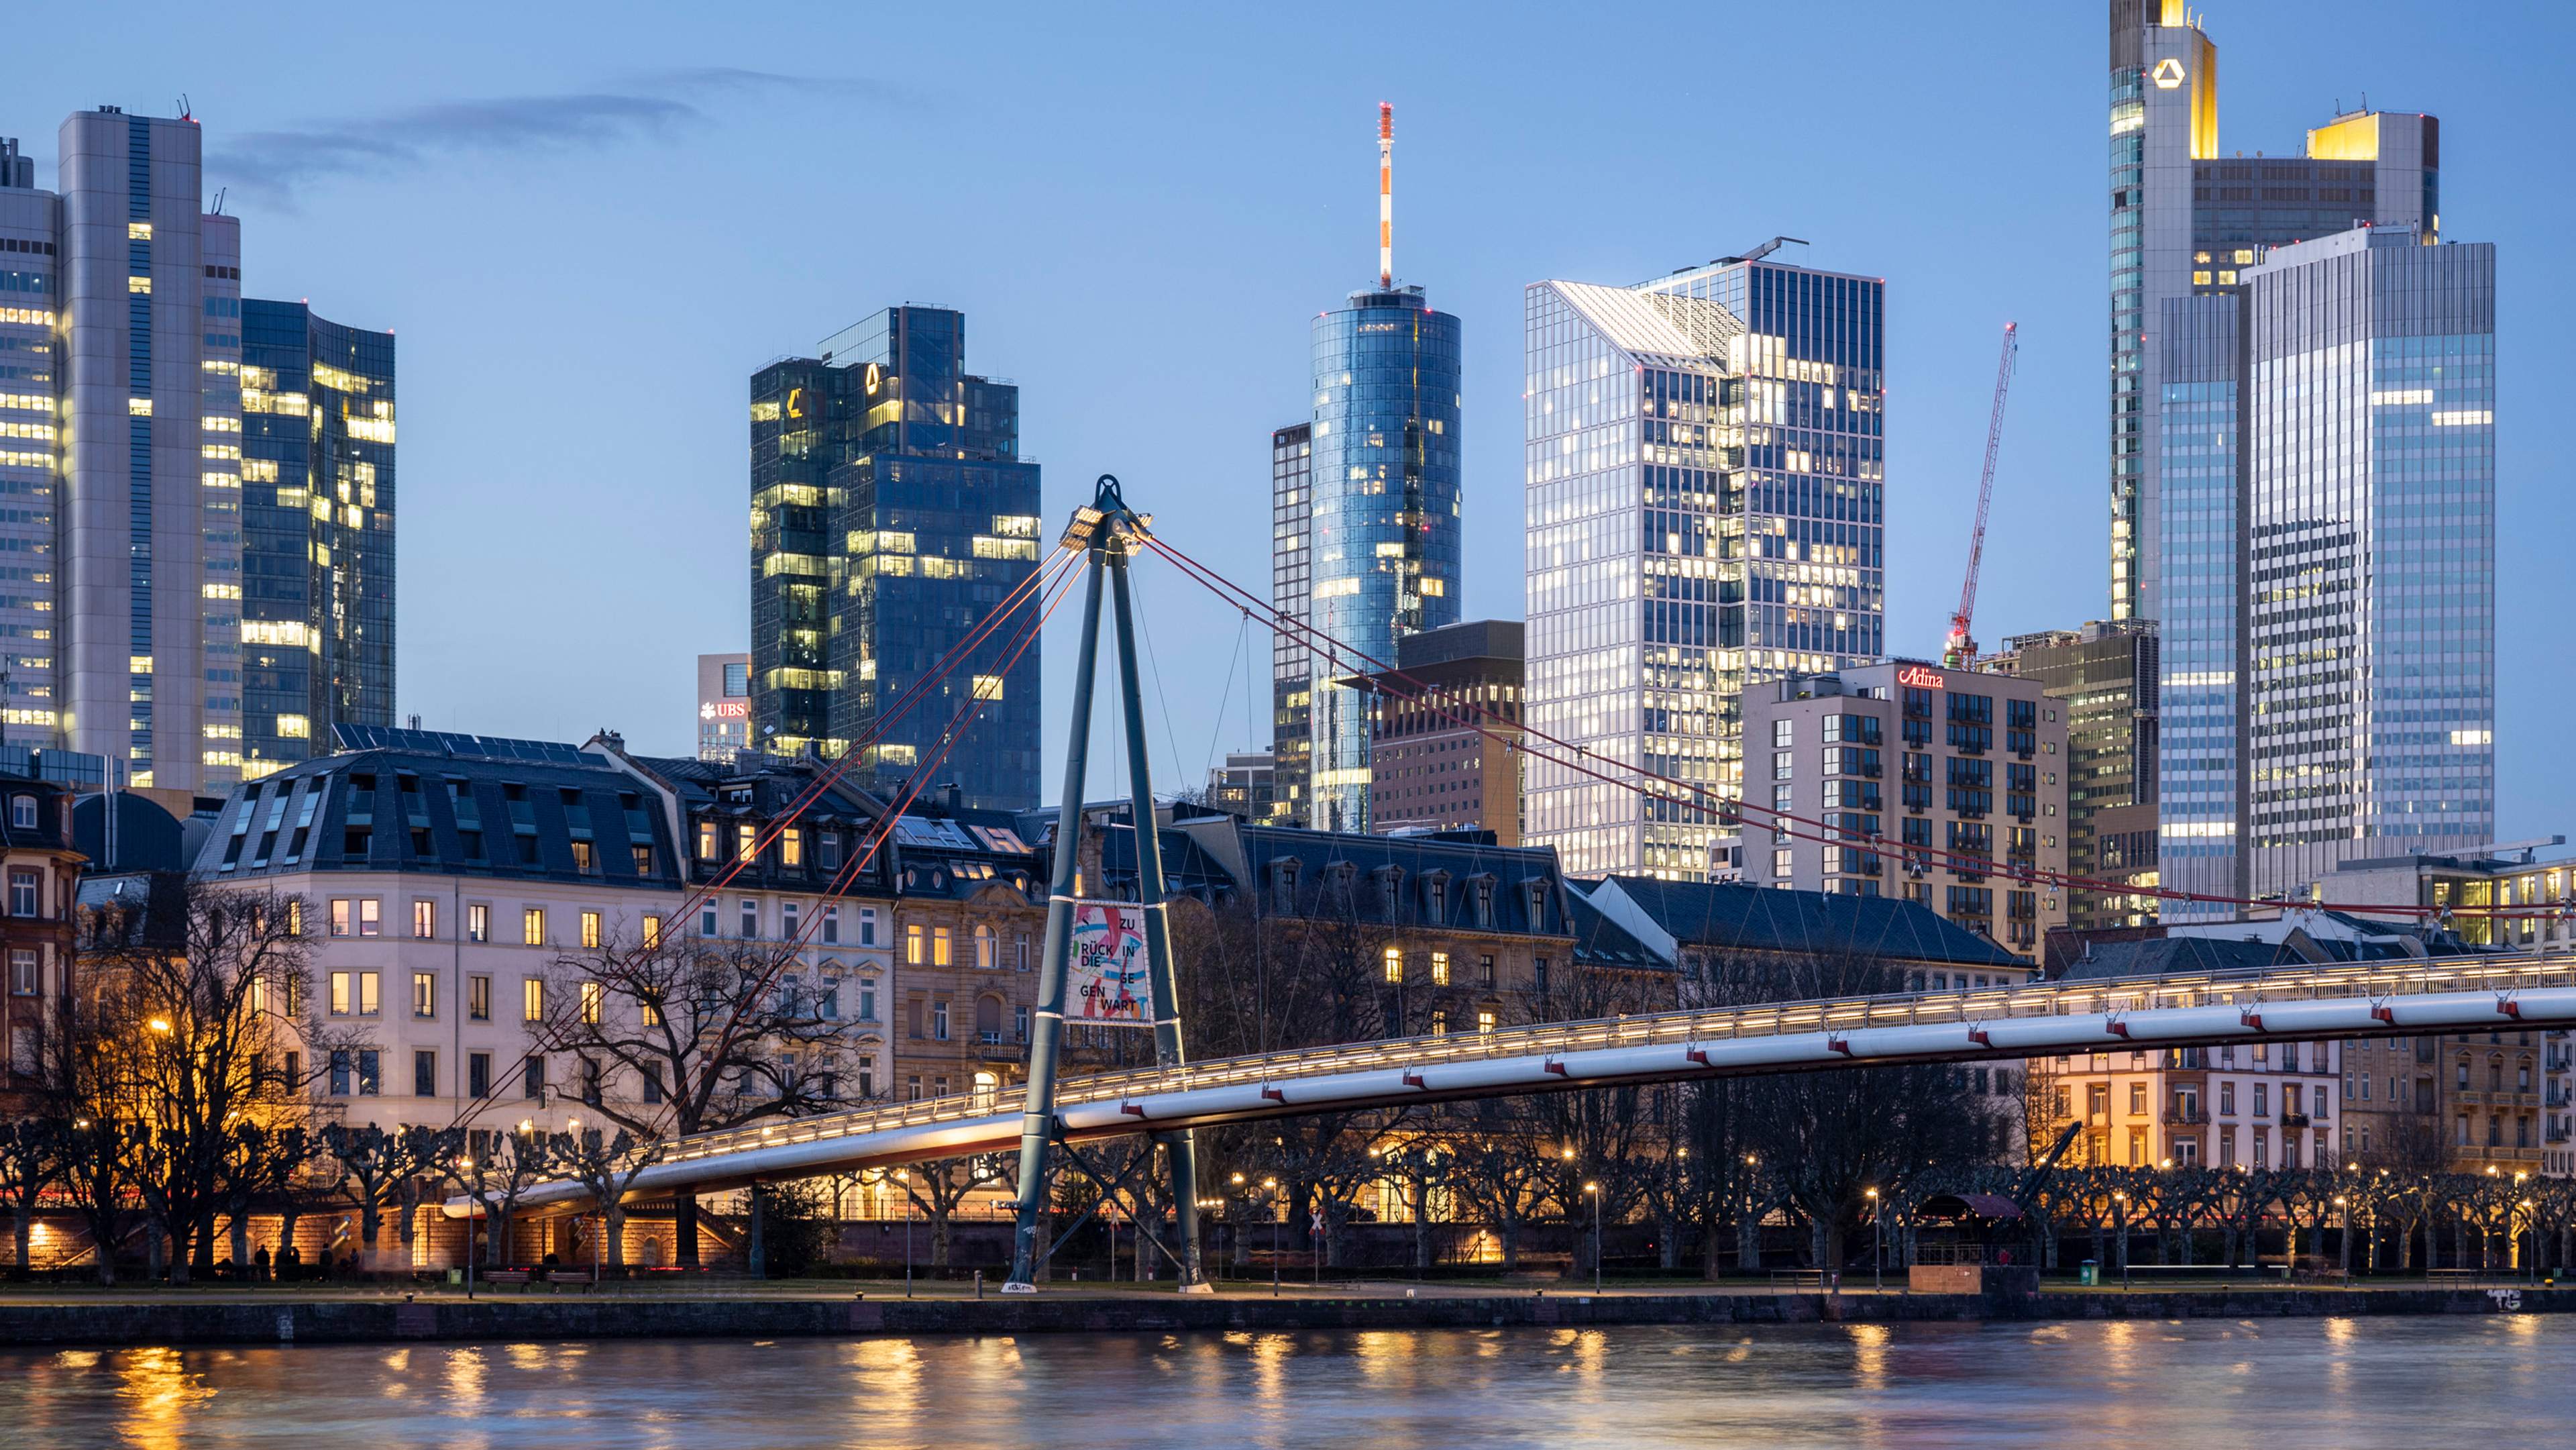 Defining the Skyline in Frankfurt